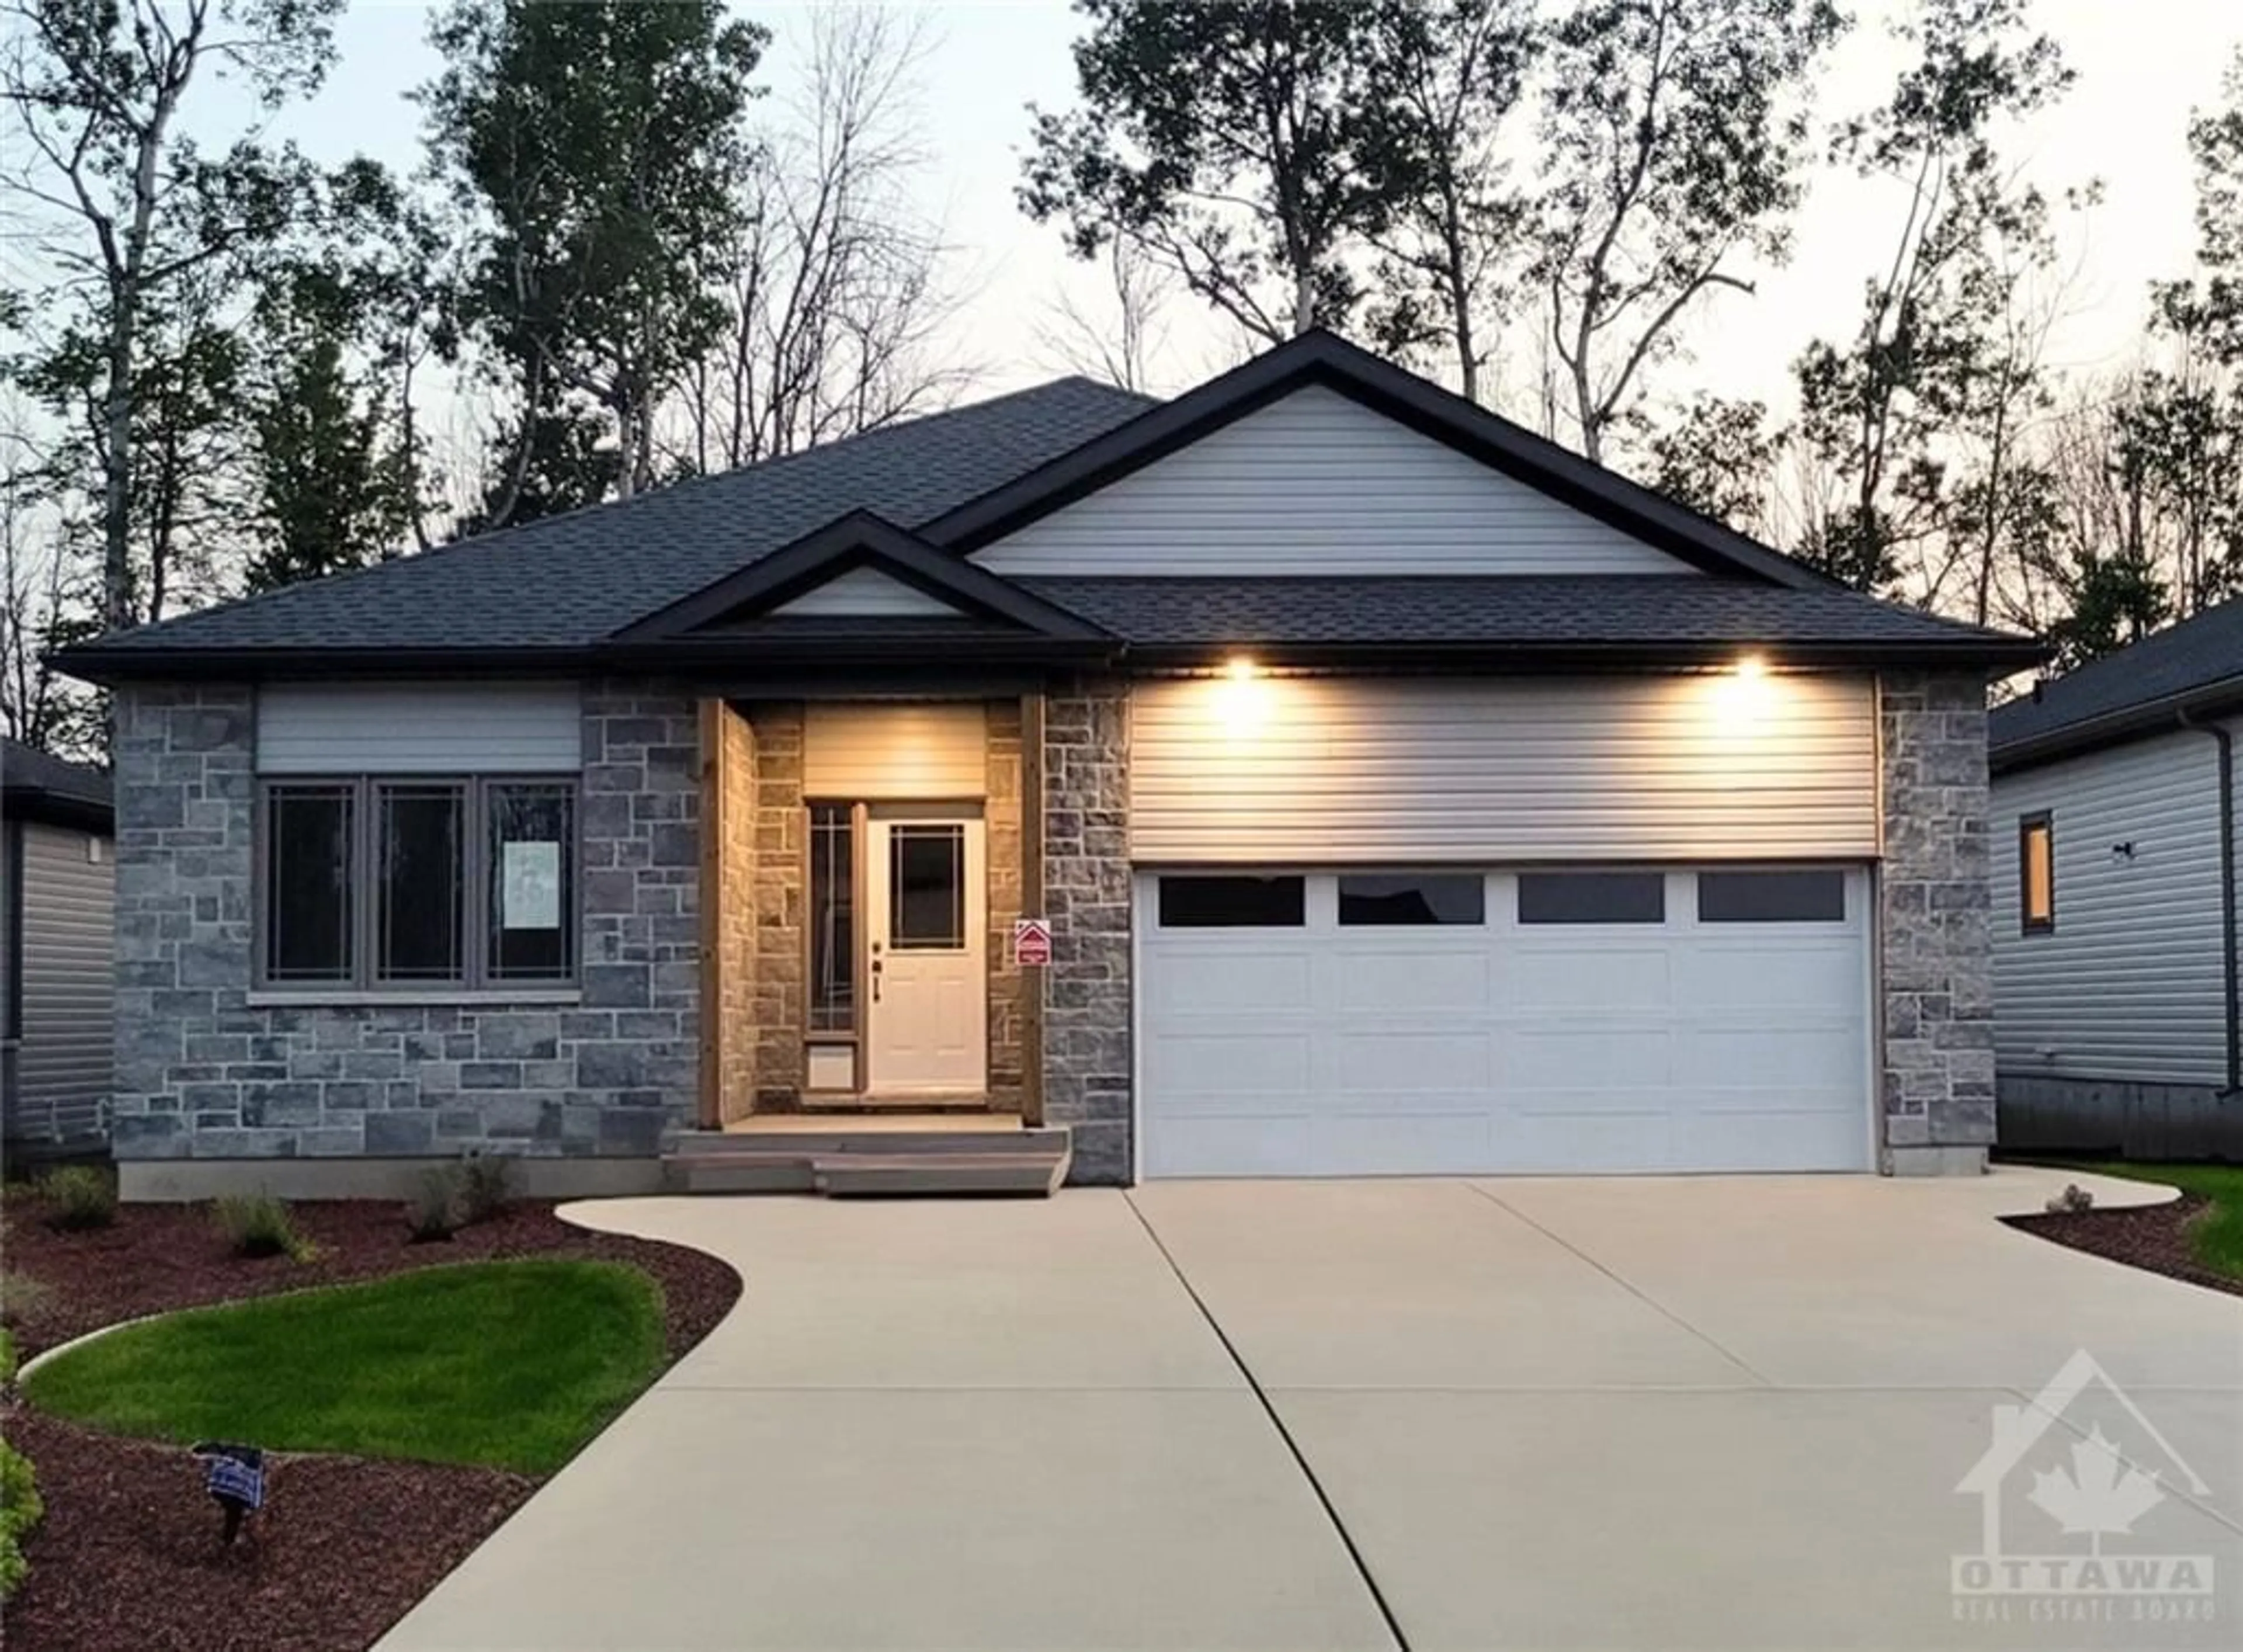 Home with brick exterior material for 266 ADLEY Dr, Brockville Ontario K6V 7J1